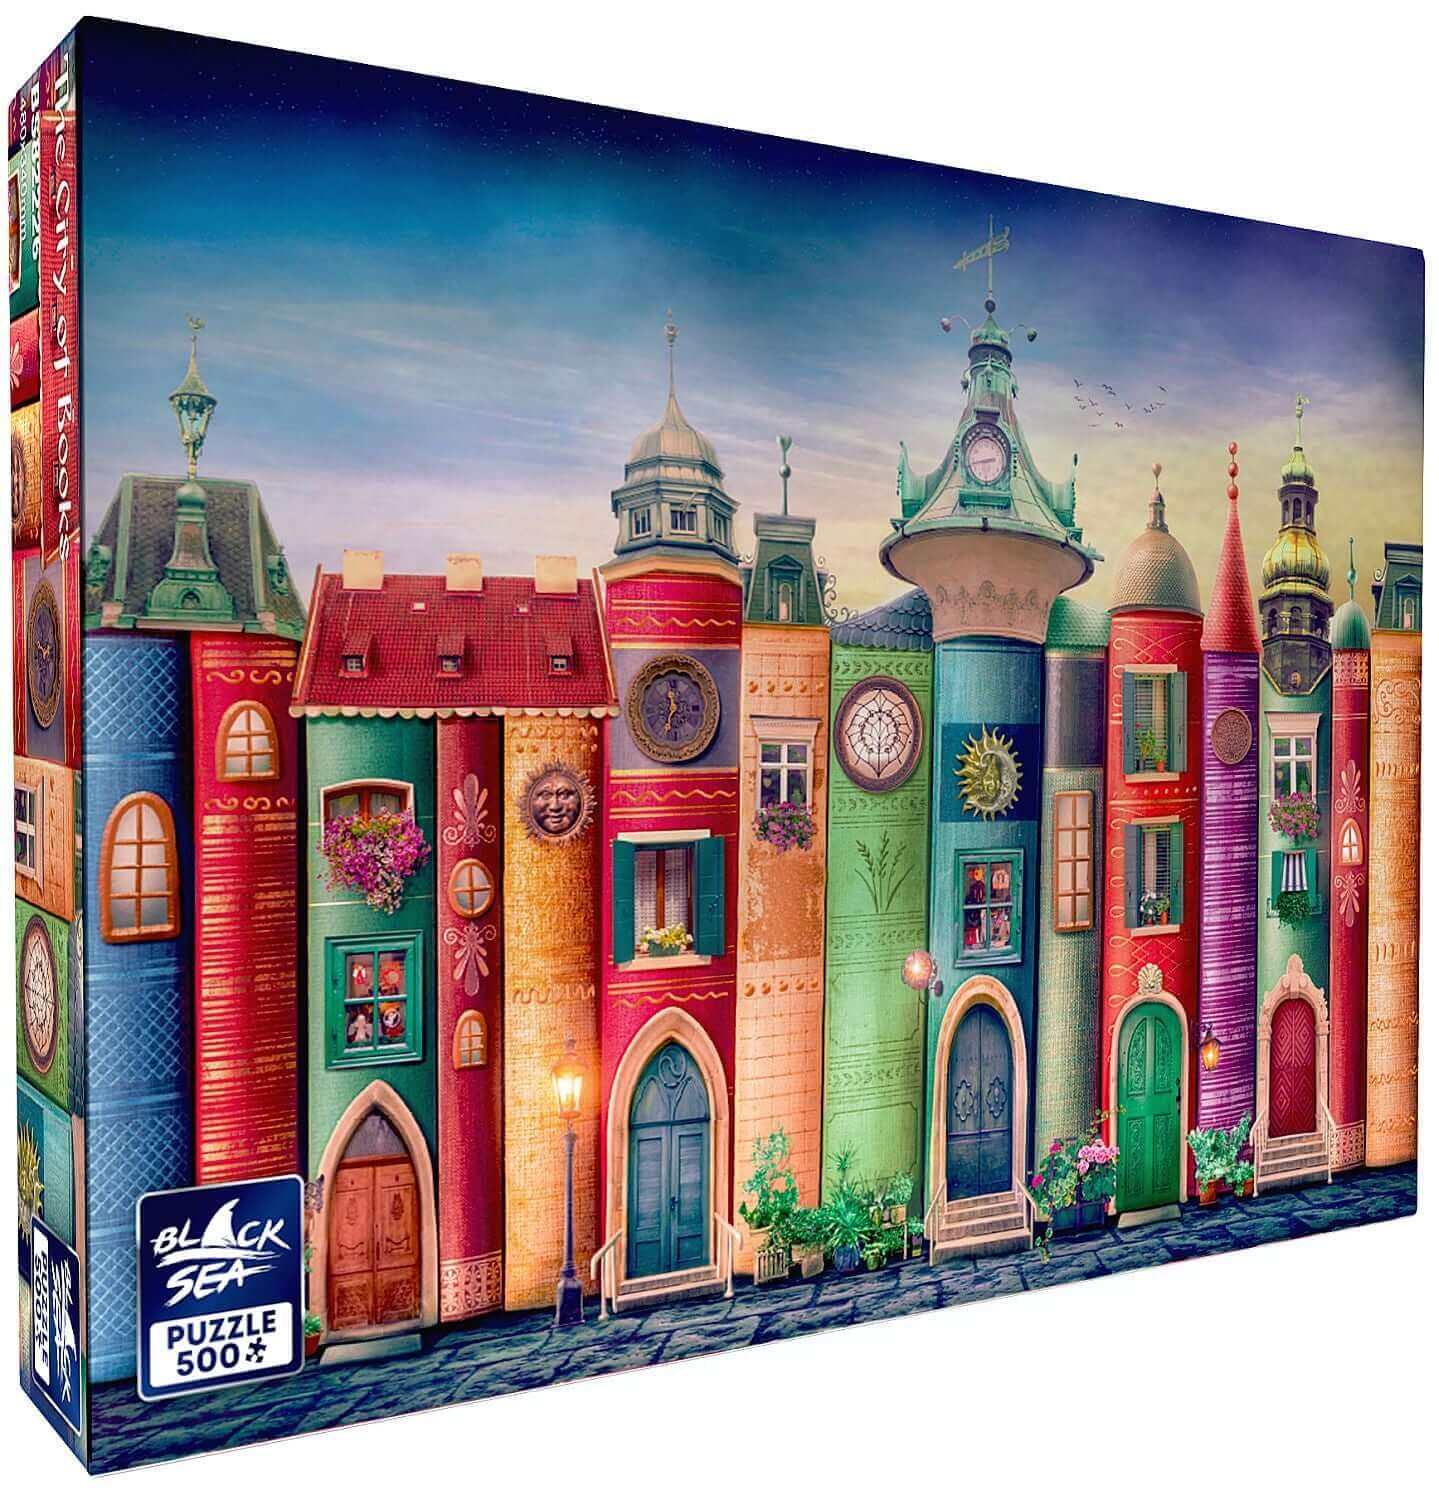 Puzzle Black Sea 500 pieces - The City of Books, -